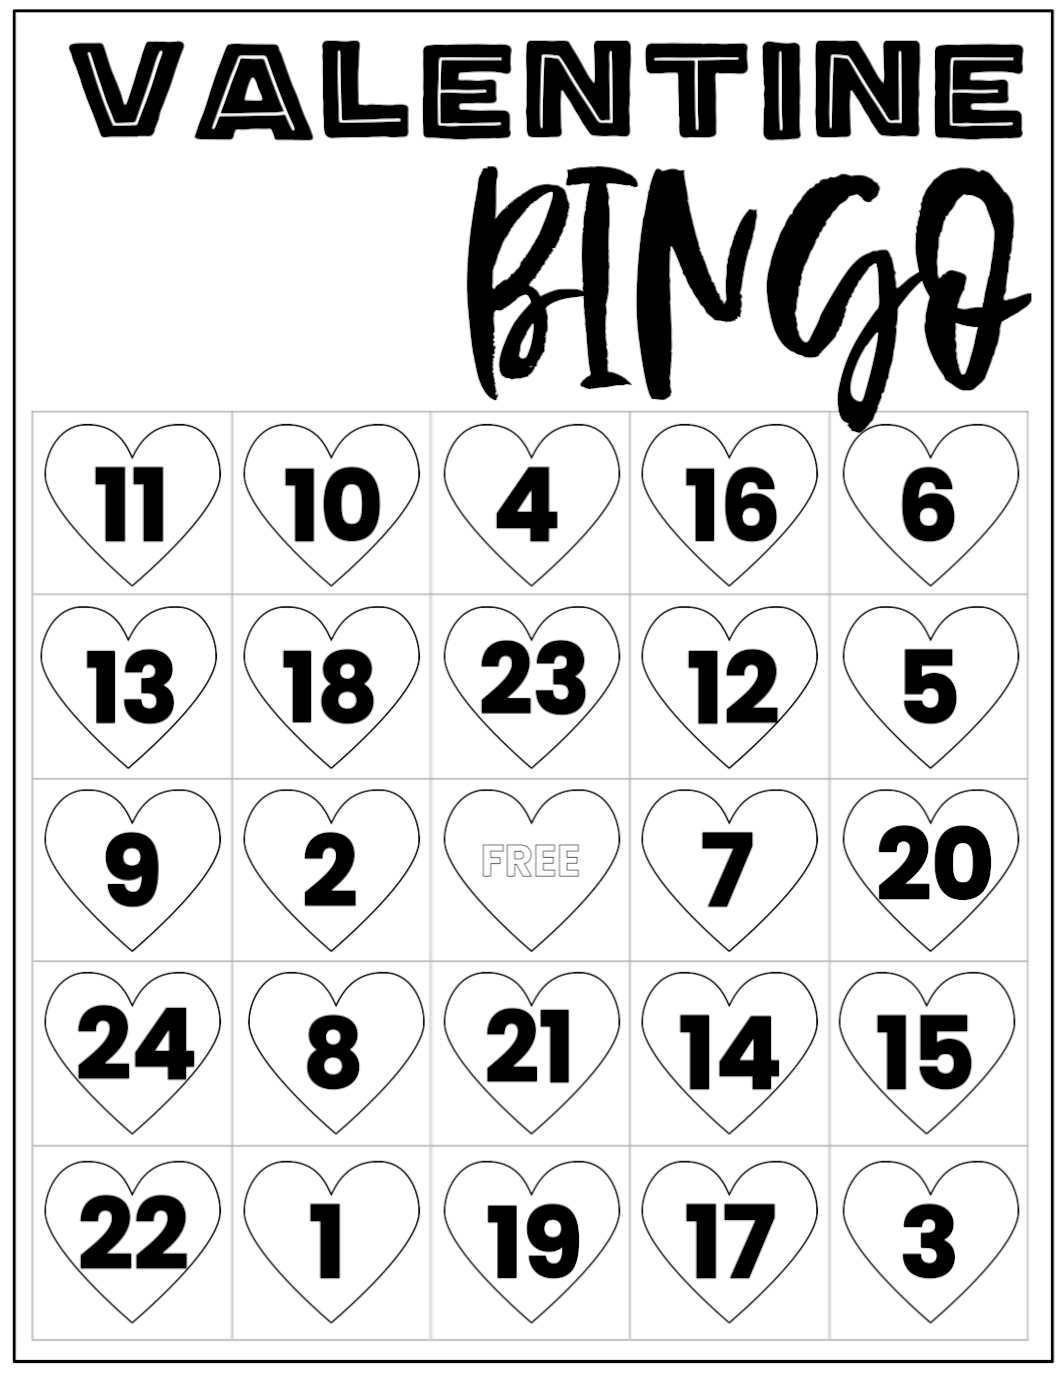 Free Valentine Bingo Printable Cards - Paper Trail Design